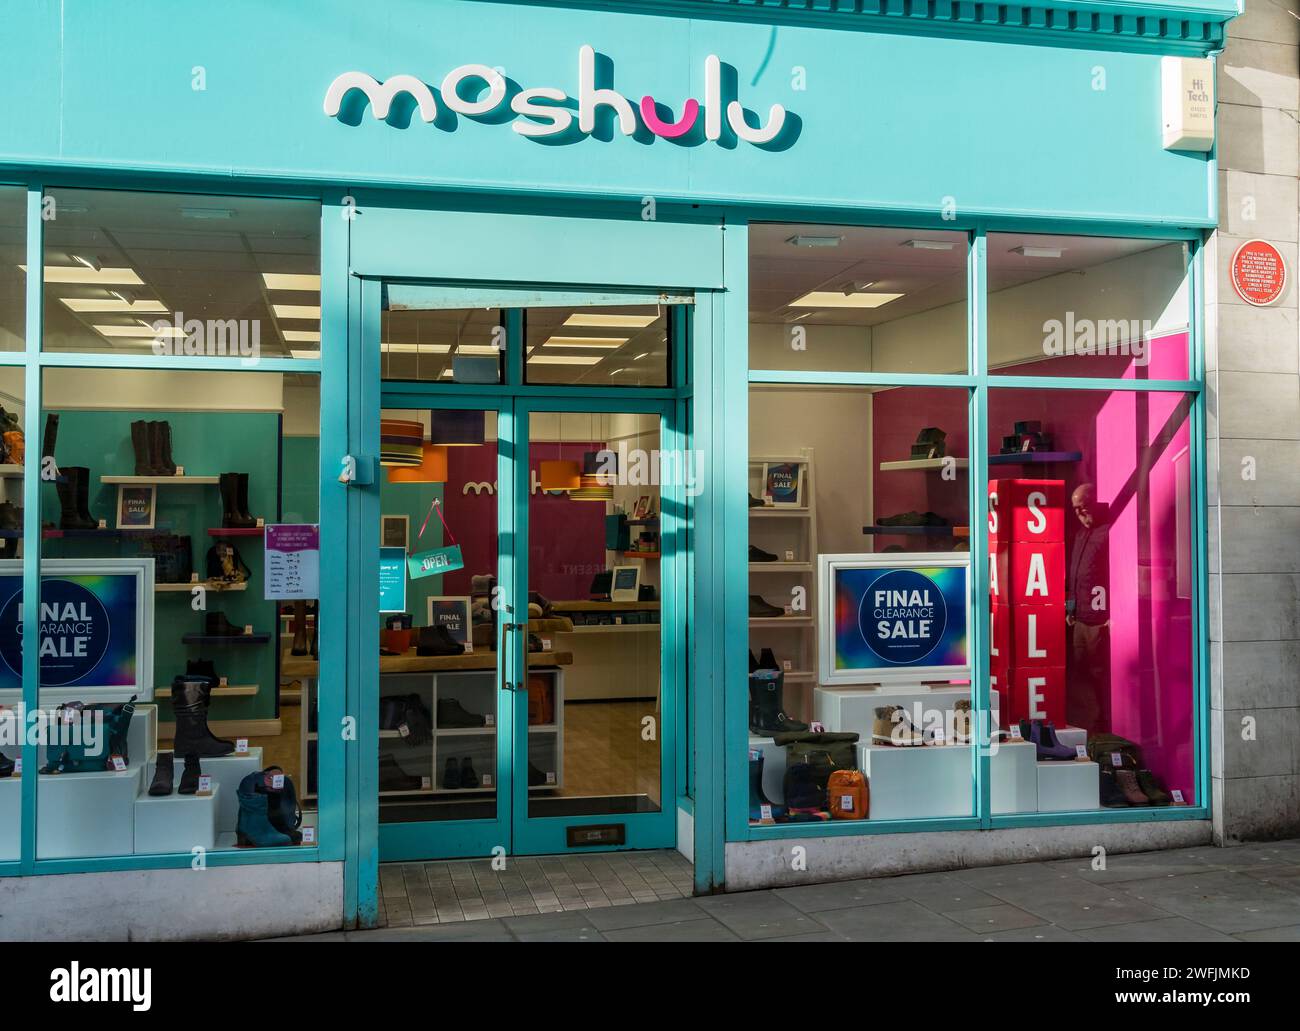 Endverkauf im Moshulu Damenschuh- und Accessoires-Shop, High Street, Lincoln City, Lincolnshire, England, UK Stockfoto